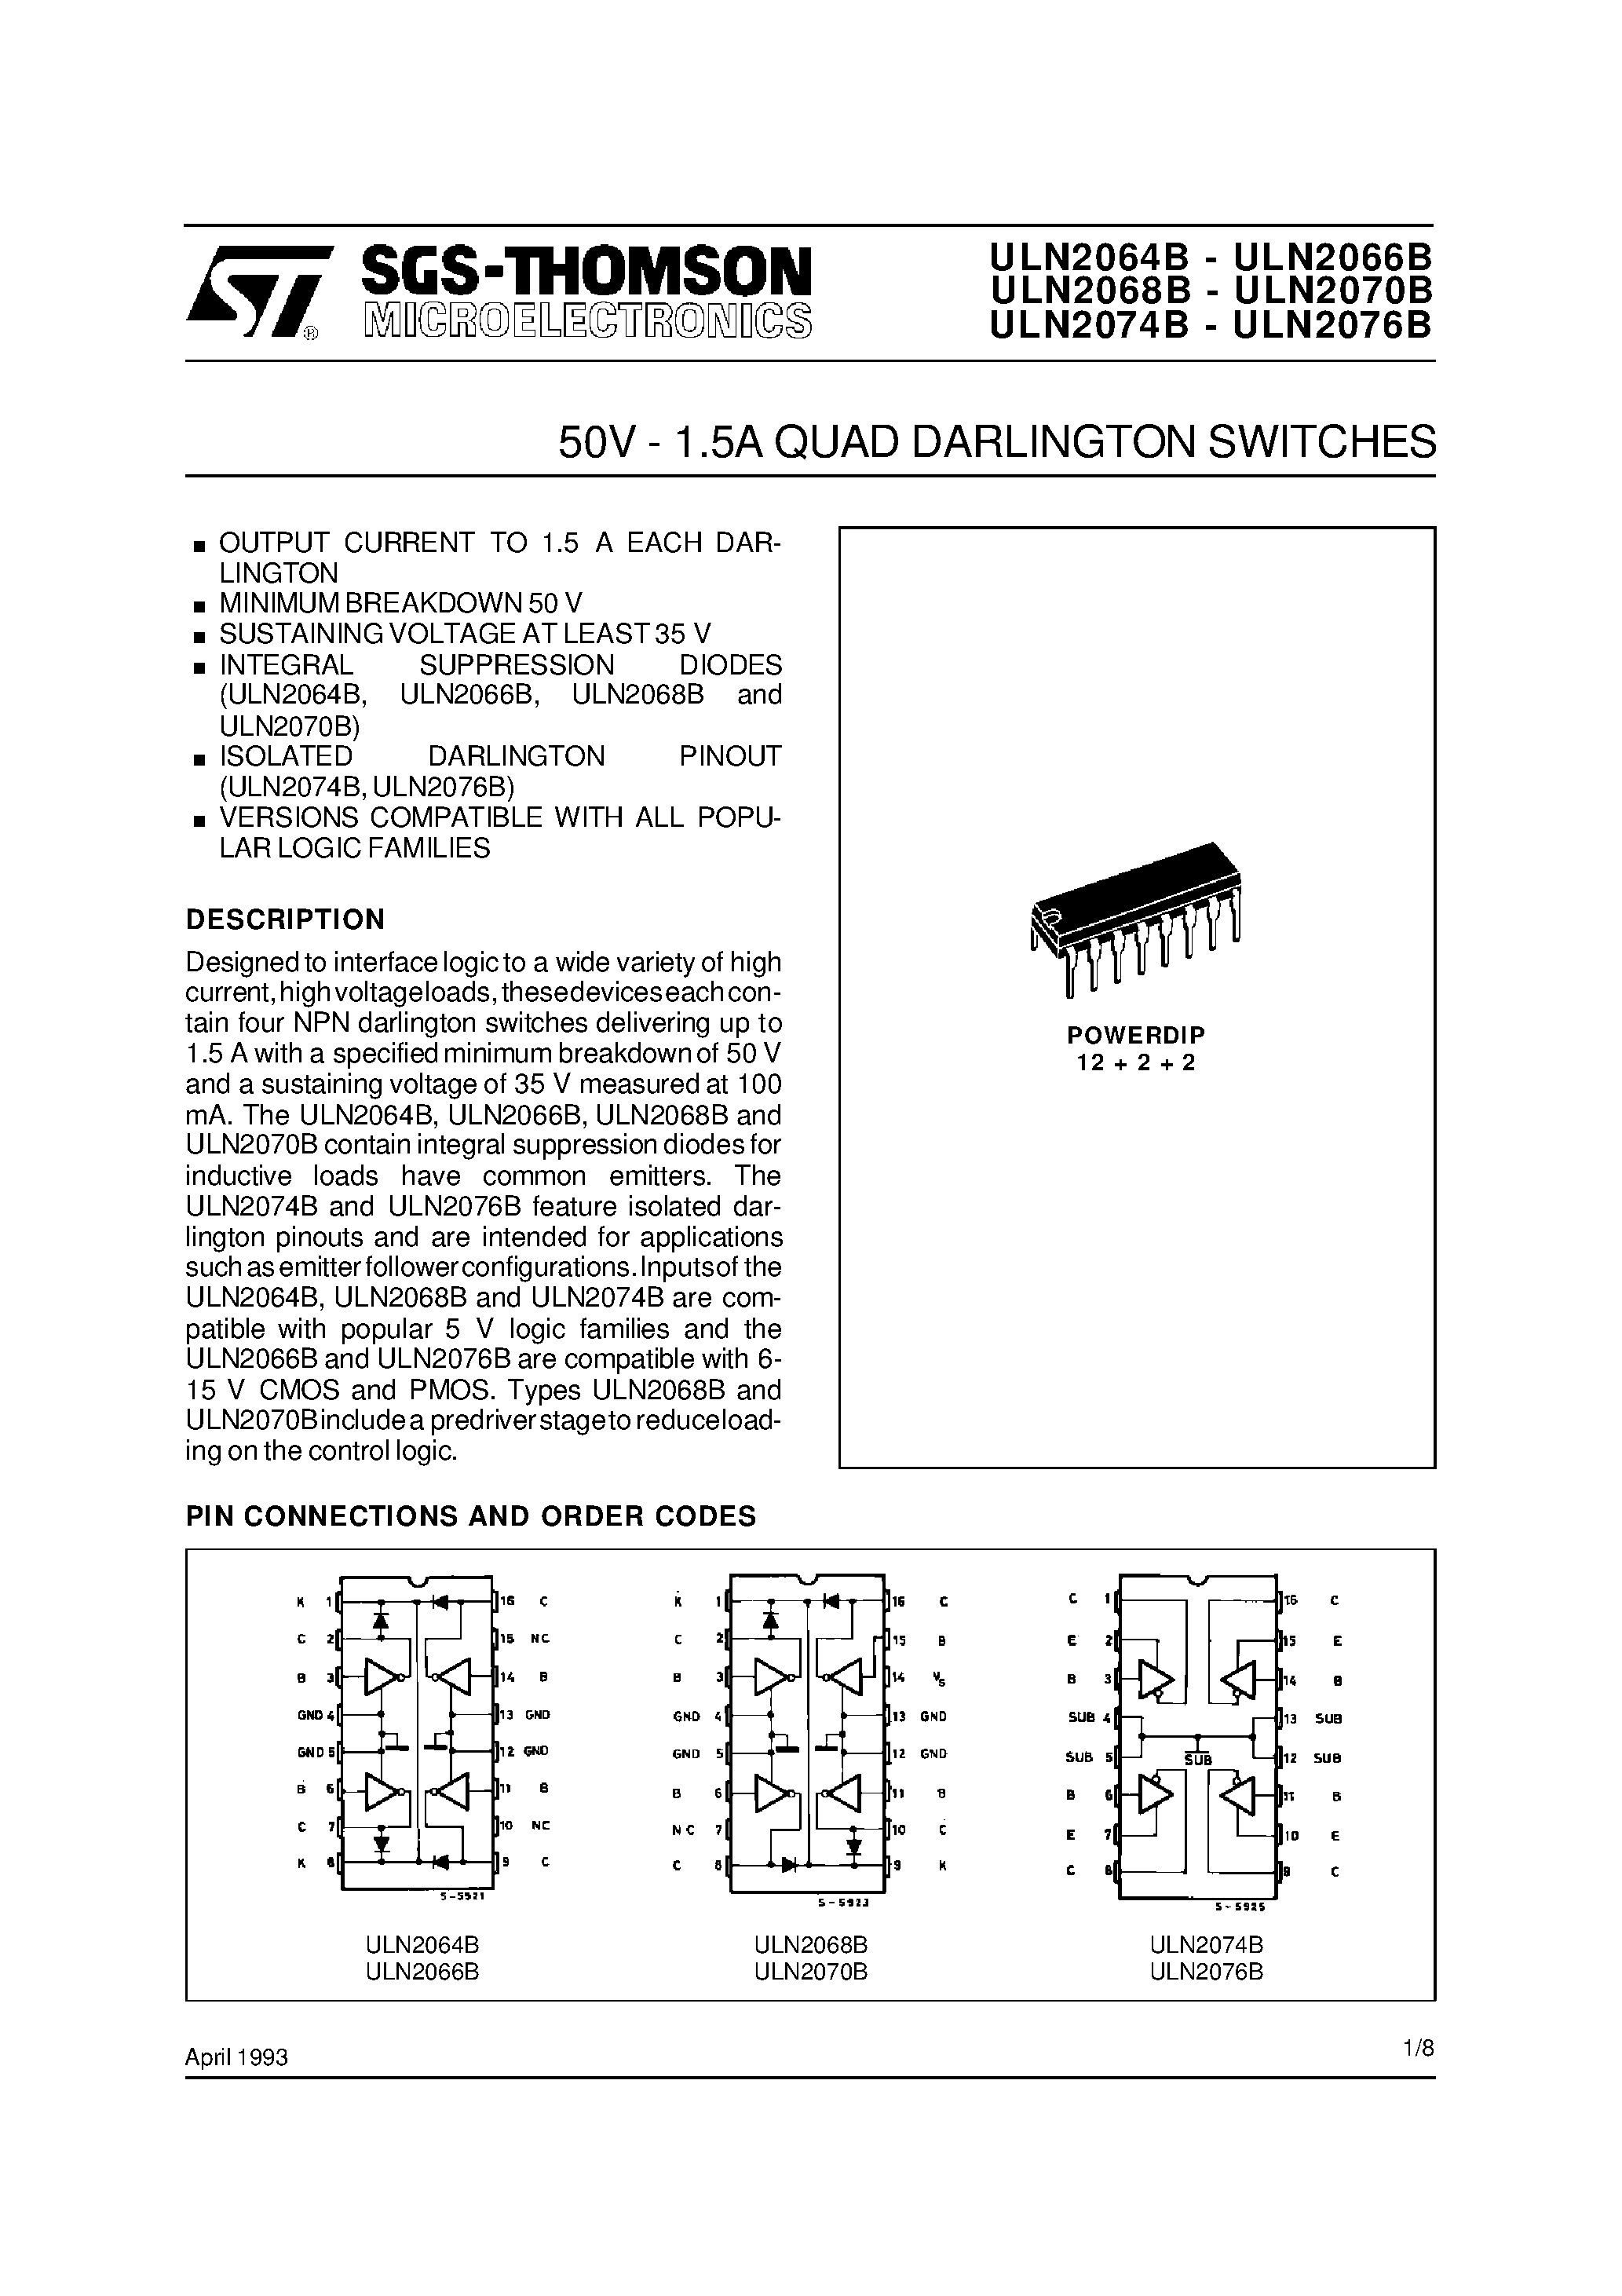 Datasheet ULN2076B - 50V - 1.5A QUAD DARLINGTON SWITCHES page 1